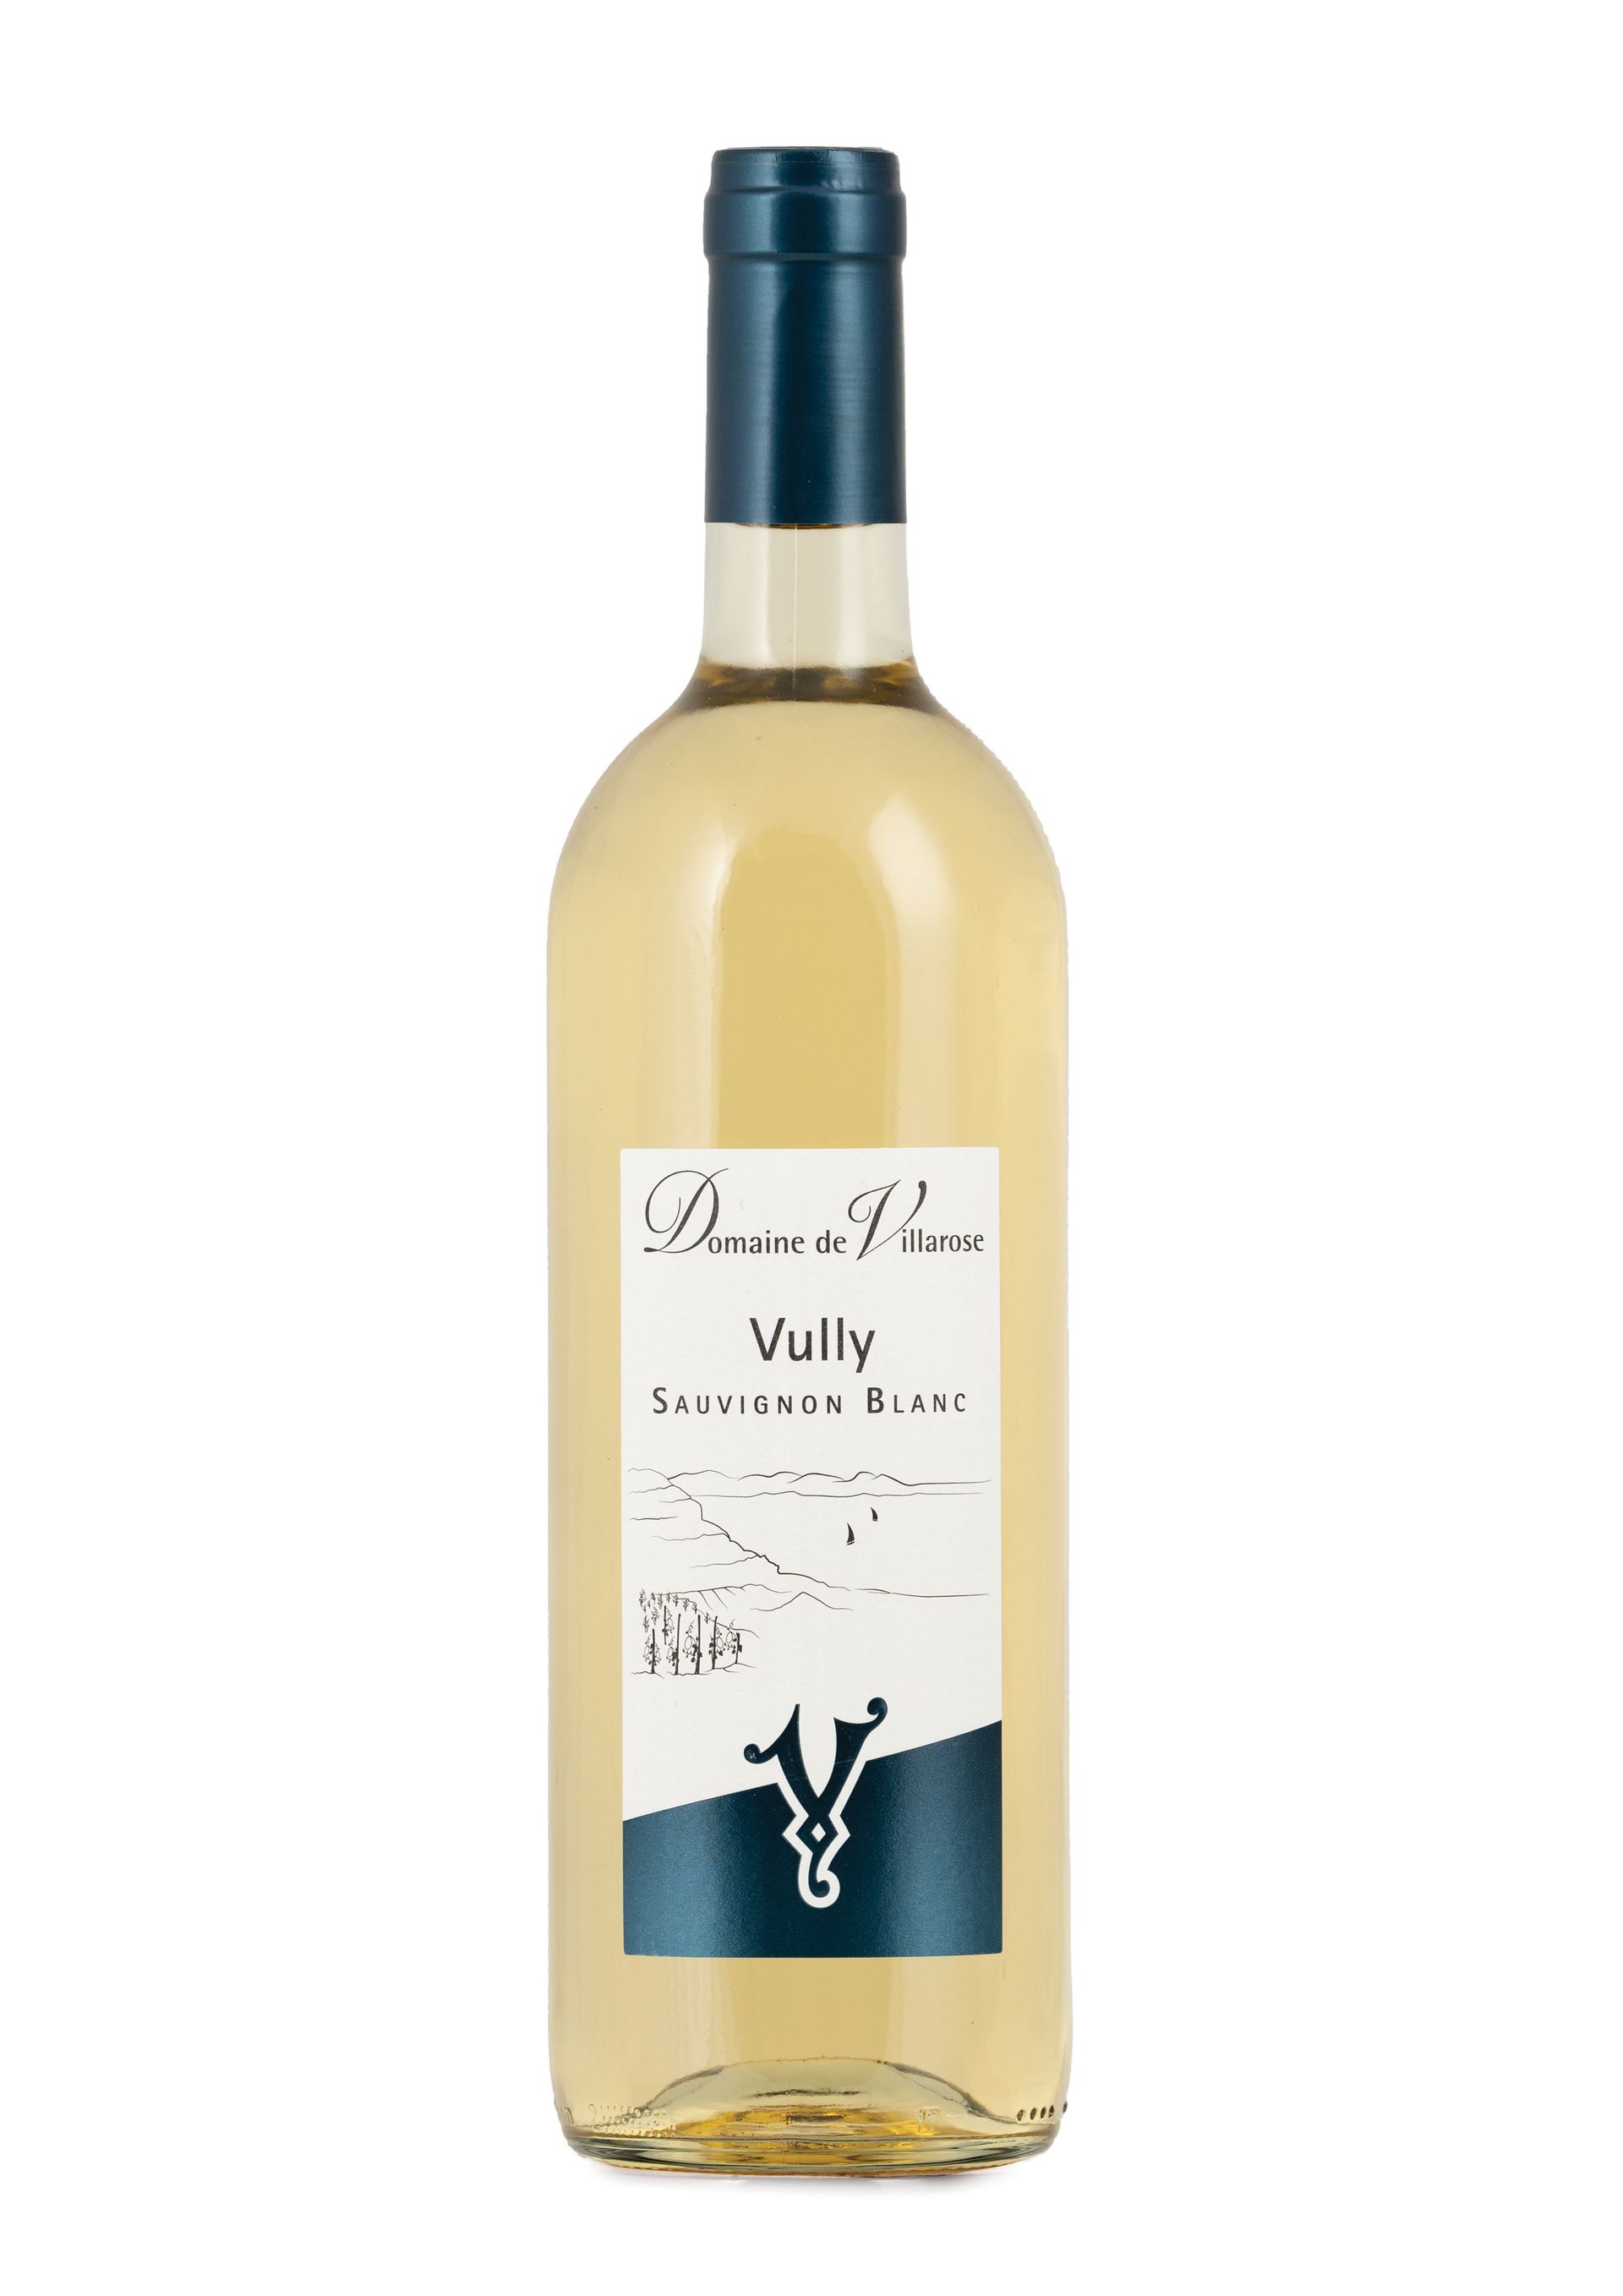 Vully Sauvignon blanc - Domaine de Villarose à Vully